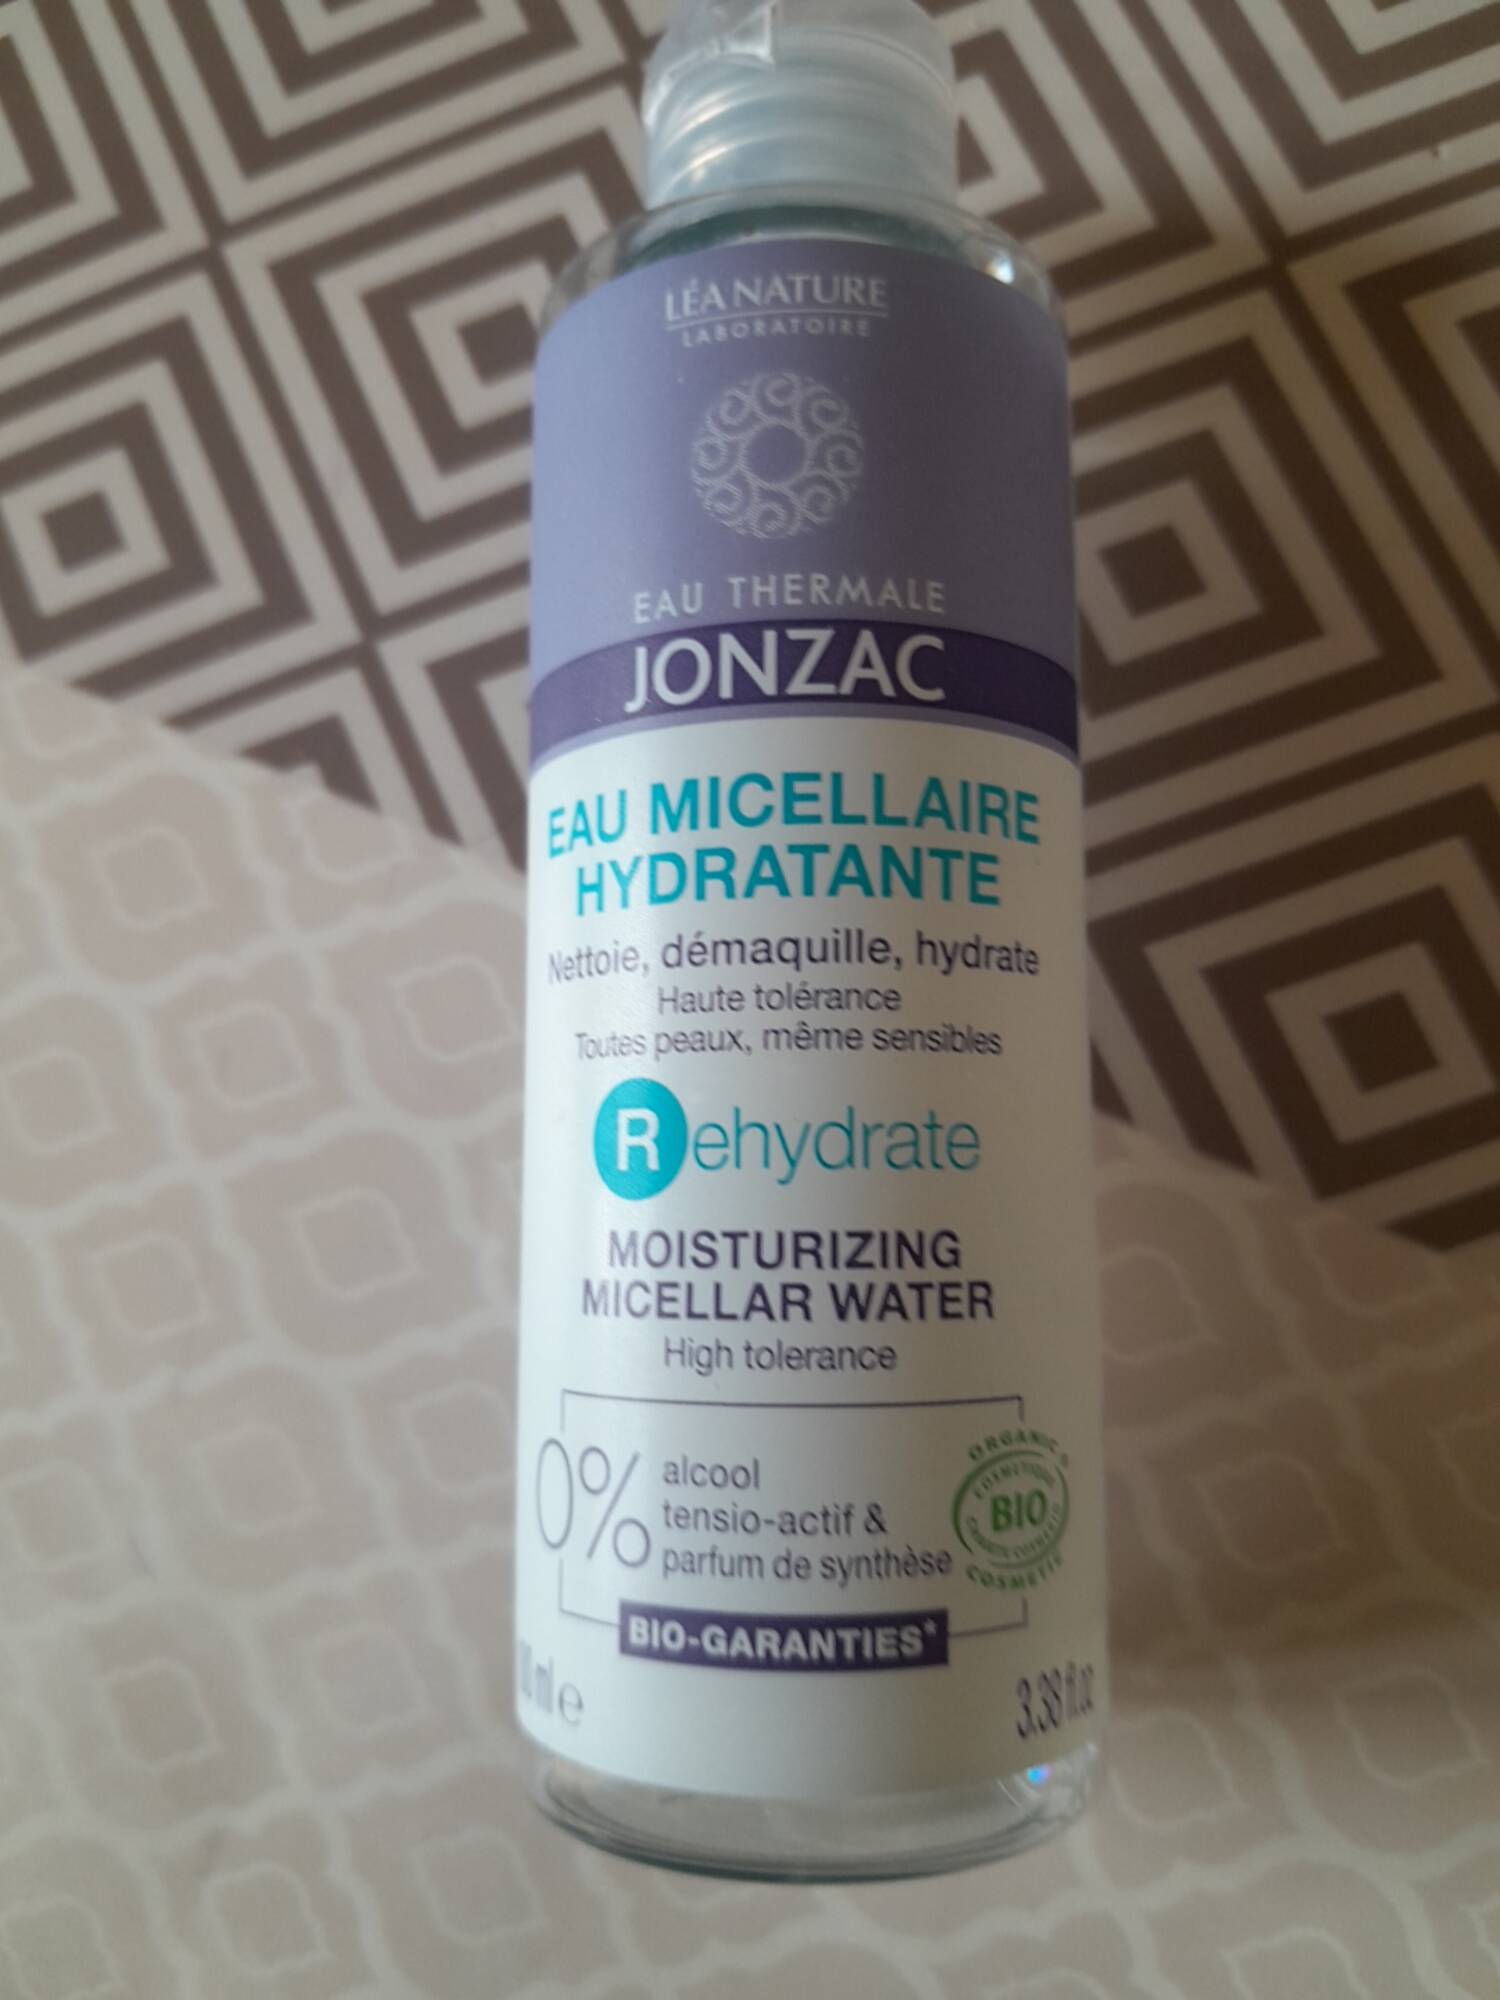 EAU THERMALE JONZAC - Rehydrate - Eau micellaire hydratante